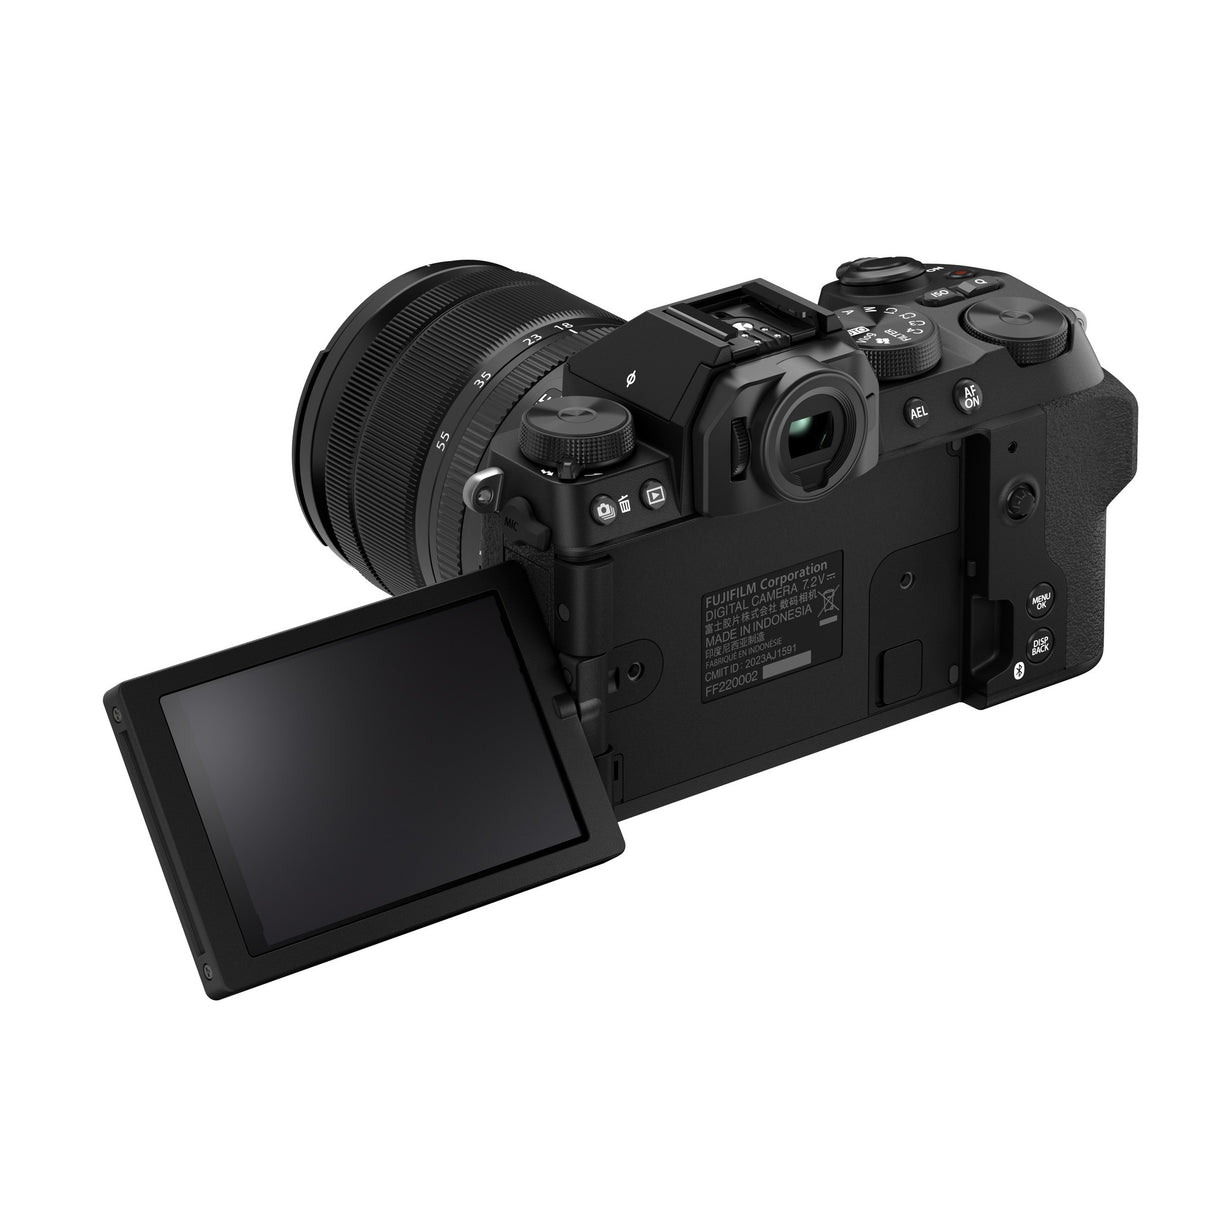 Fujifilm X-S20 Mirrorless Camera with 18-55mm Lens, Black